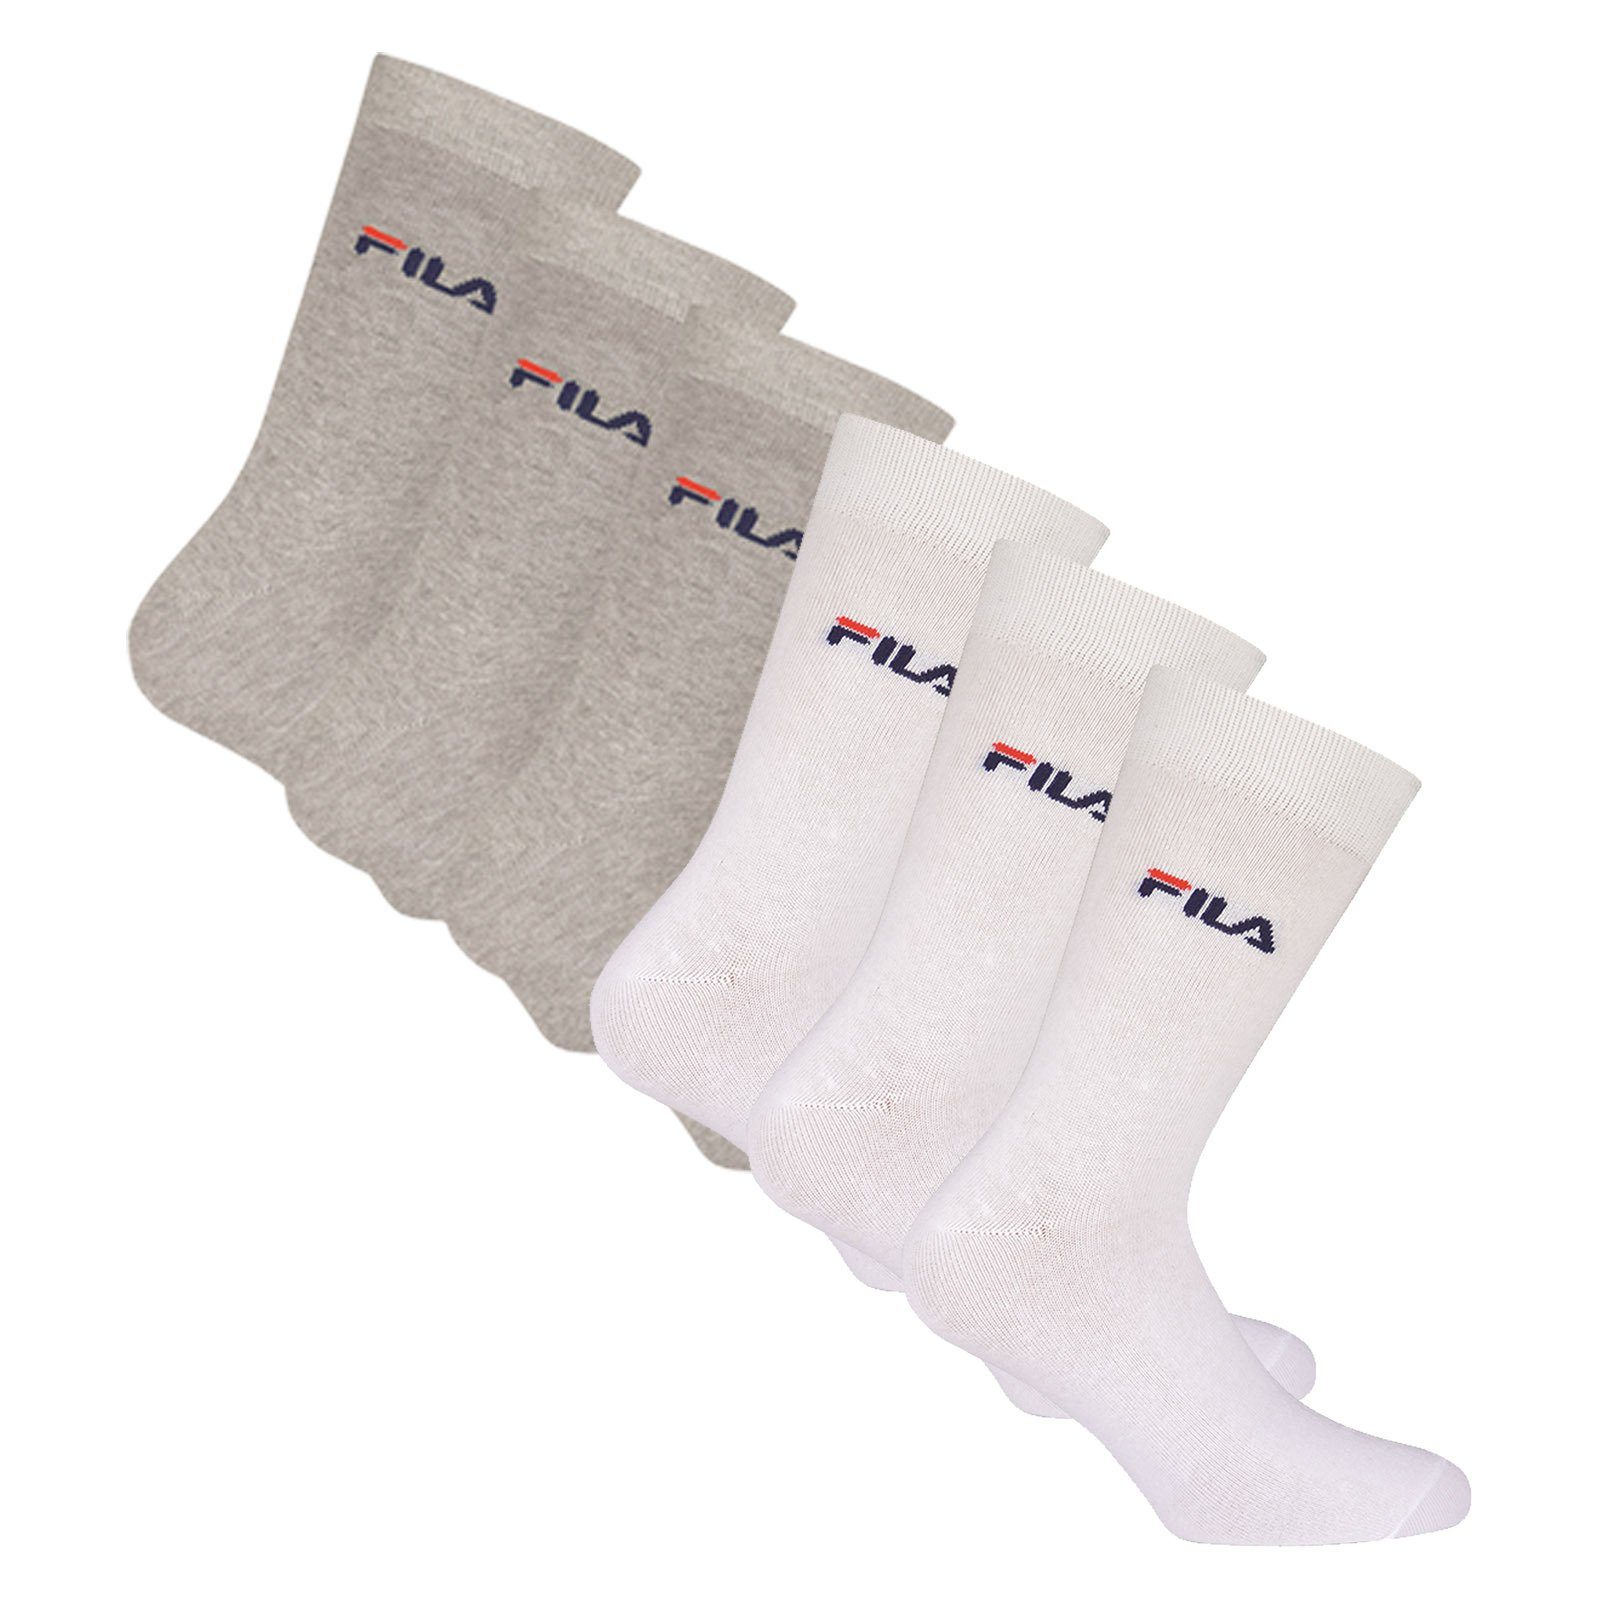 Fila Sportsocken Unisex Socken, 6er Pack - Crew Socks, Strümpfe Grau/Weiß